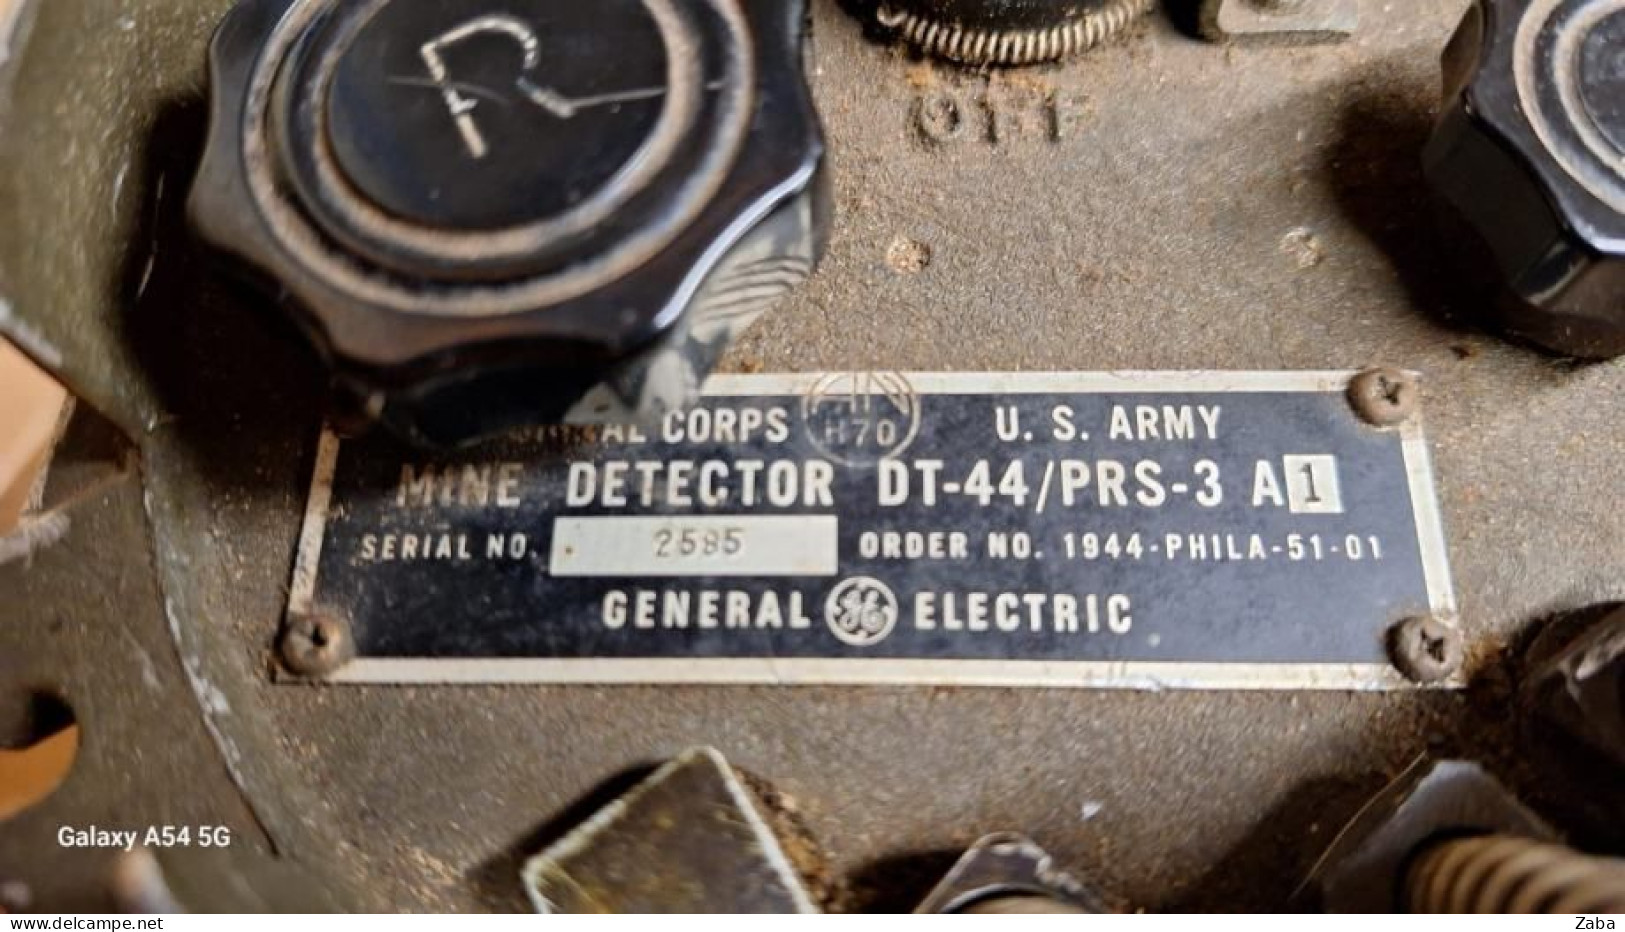 WW2 US Army Mine Detector, 1943 - Equipment